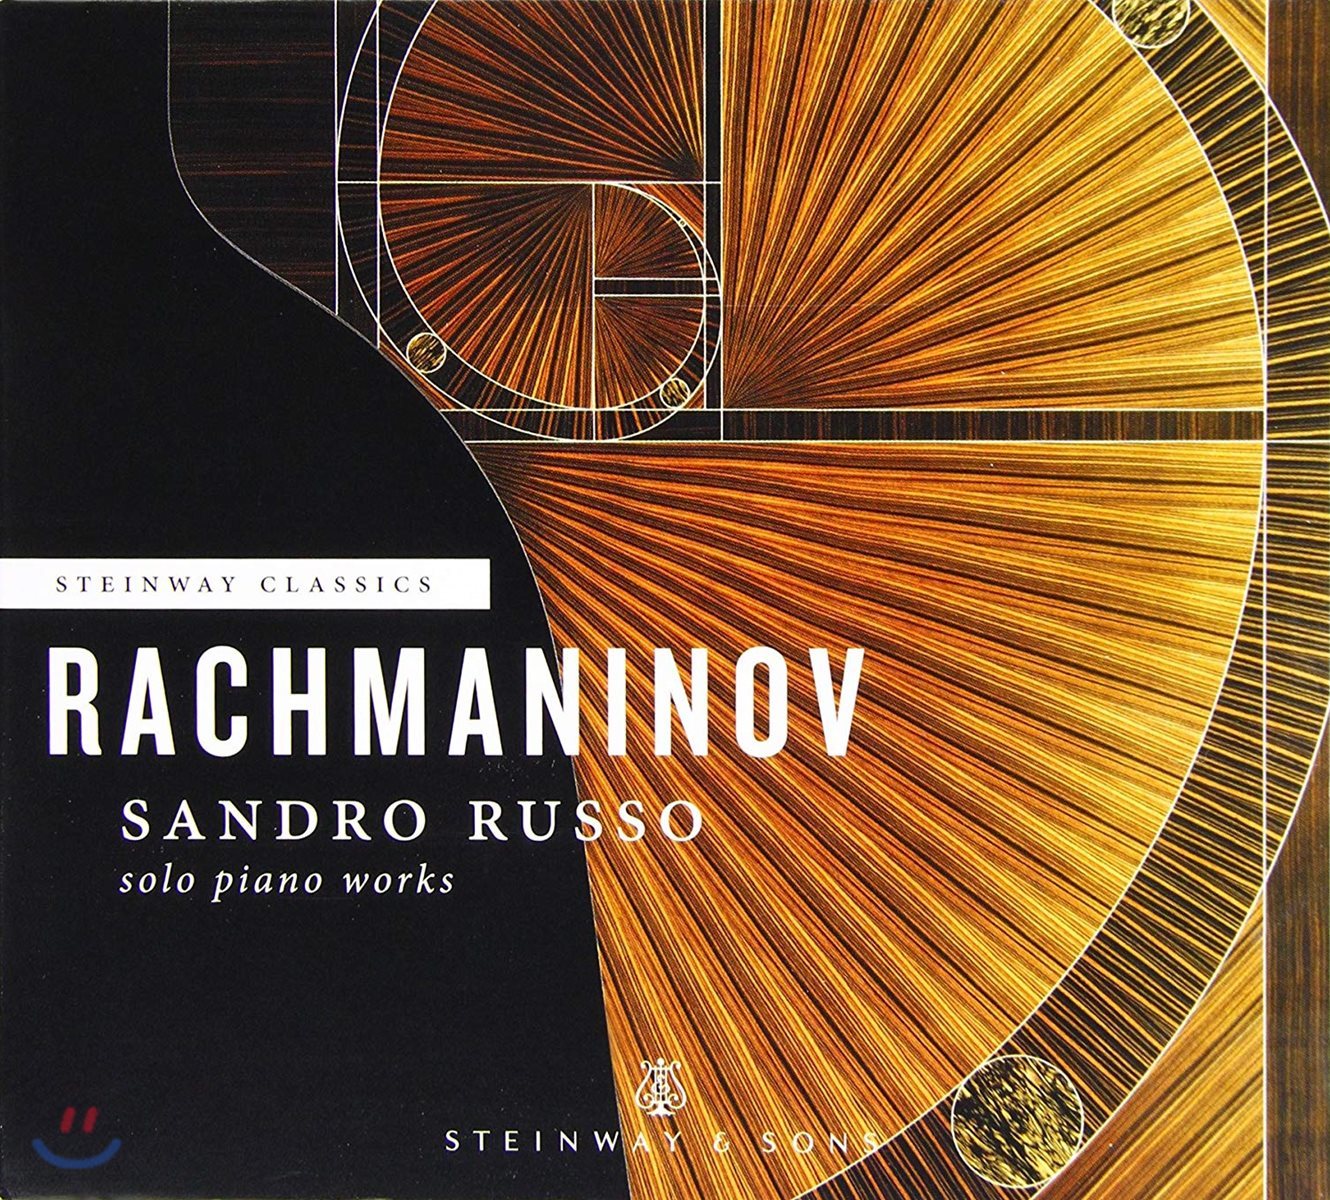 Sandro Russo 라흐마니노프: 피아노 소나타 1번, 코렐리 주제에 의한 변주곡 등 (Rachmaninov: Solo Pianoo Works) 산드로 로소